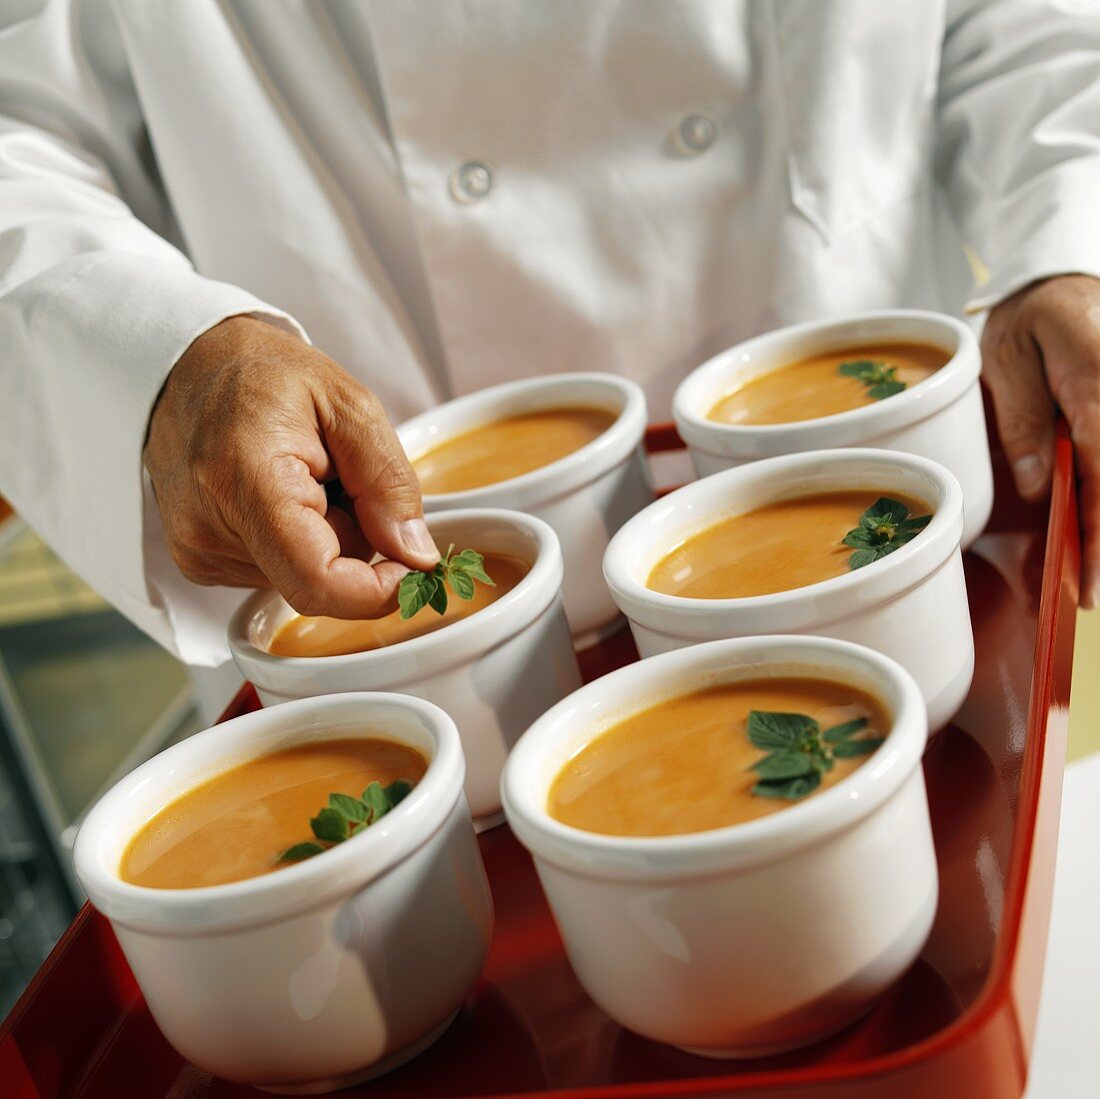 A Chef Placing Oregano Garnish on Bowls of Tomato Soup